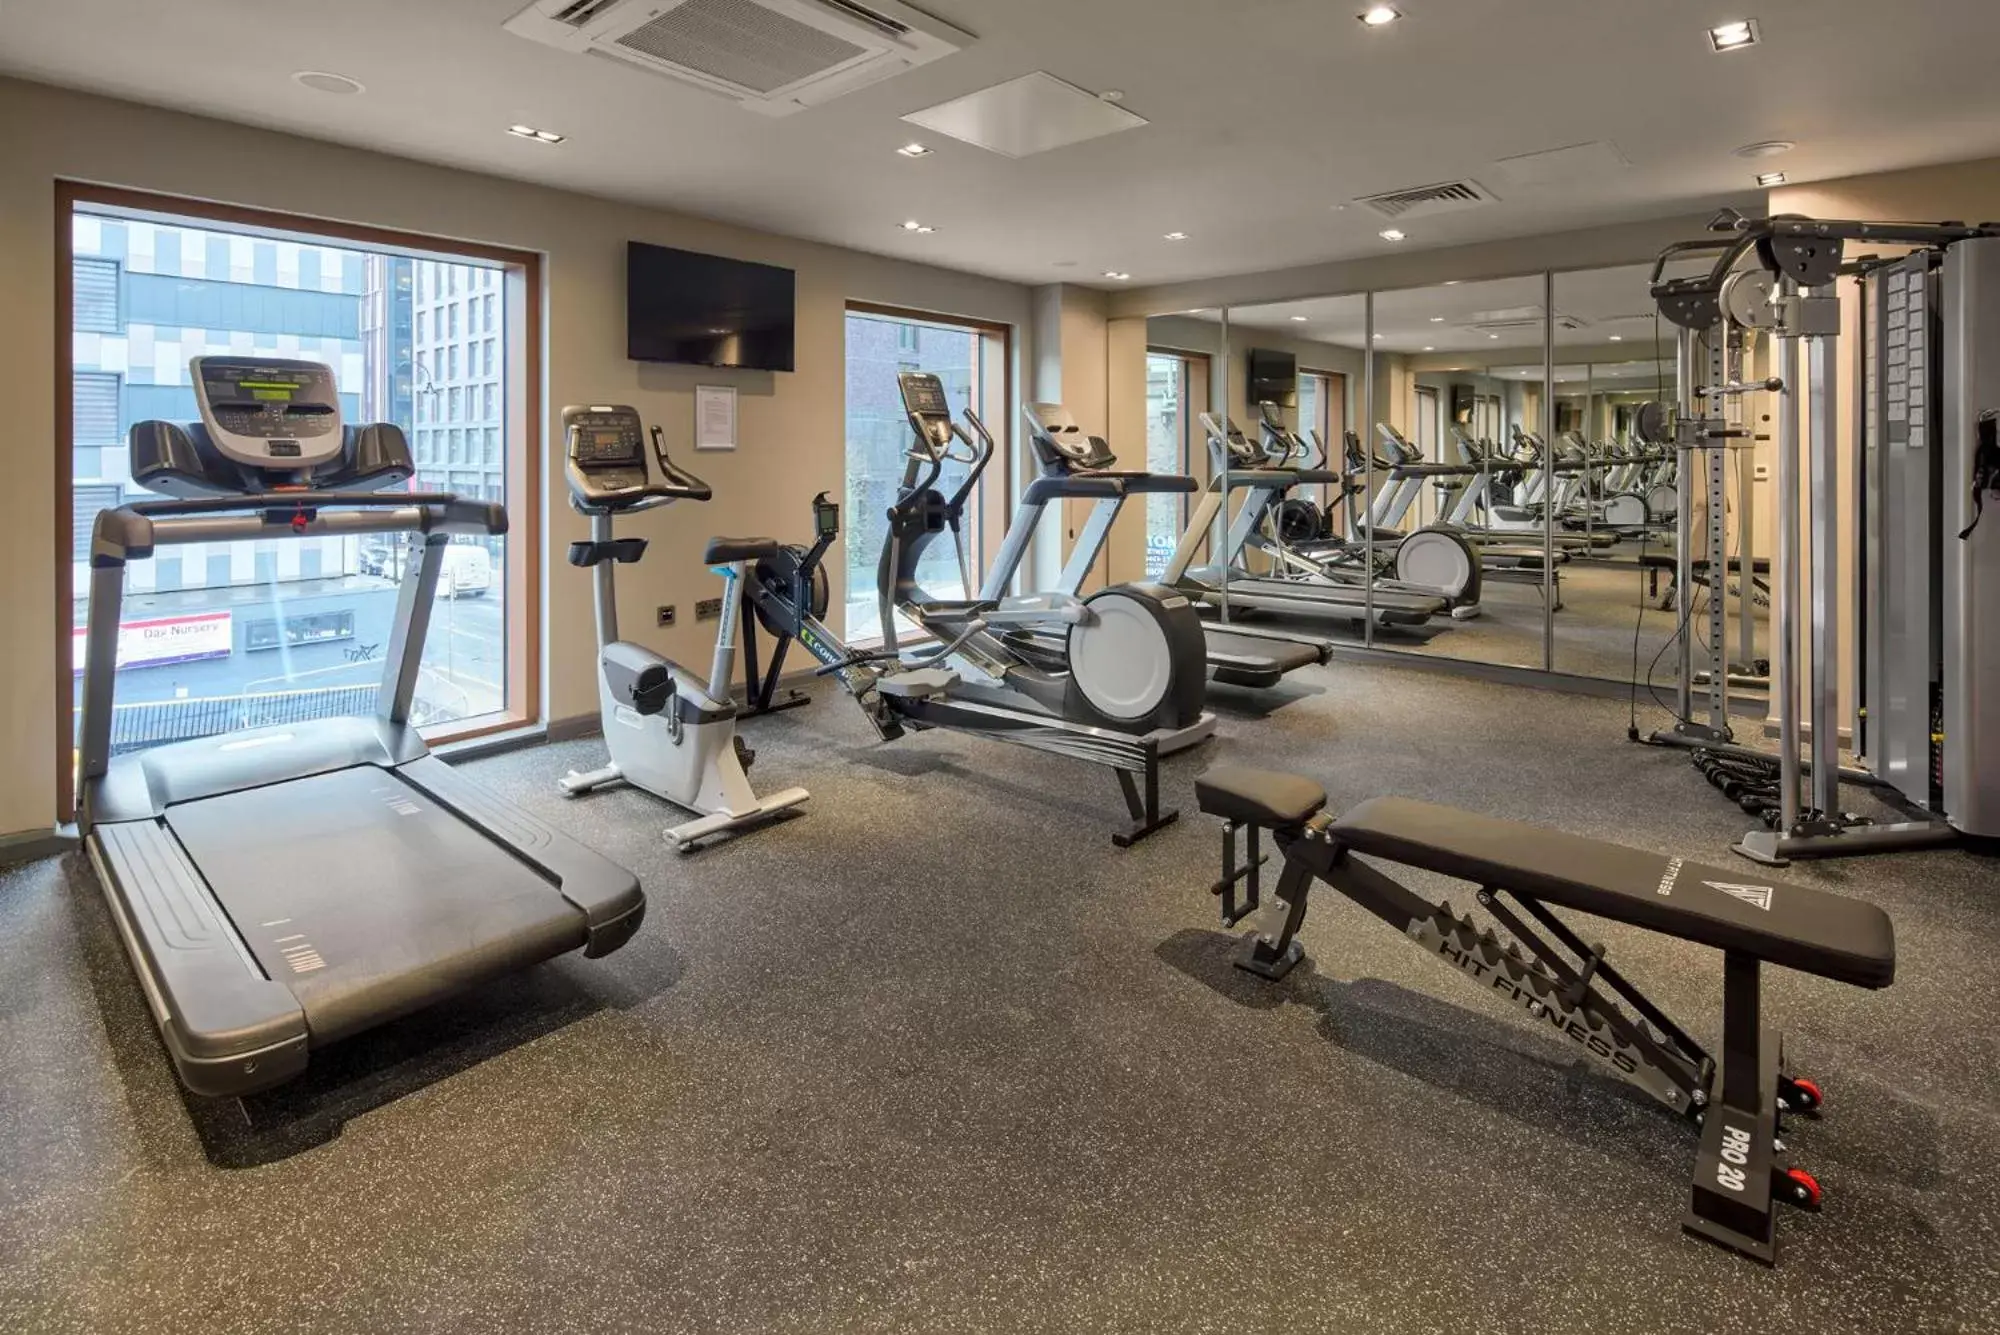 Fitness centre/facilities, Fitness Center/Facilities in Maldron Hotel Manchester City Centre